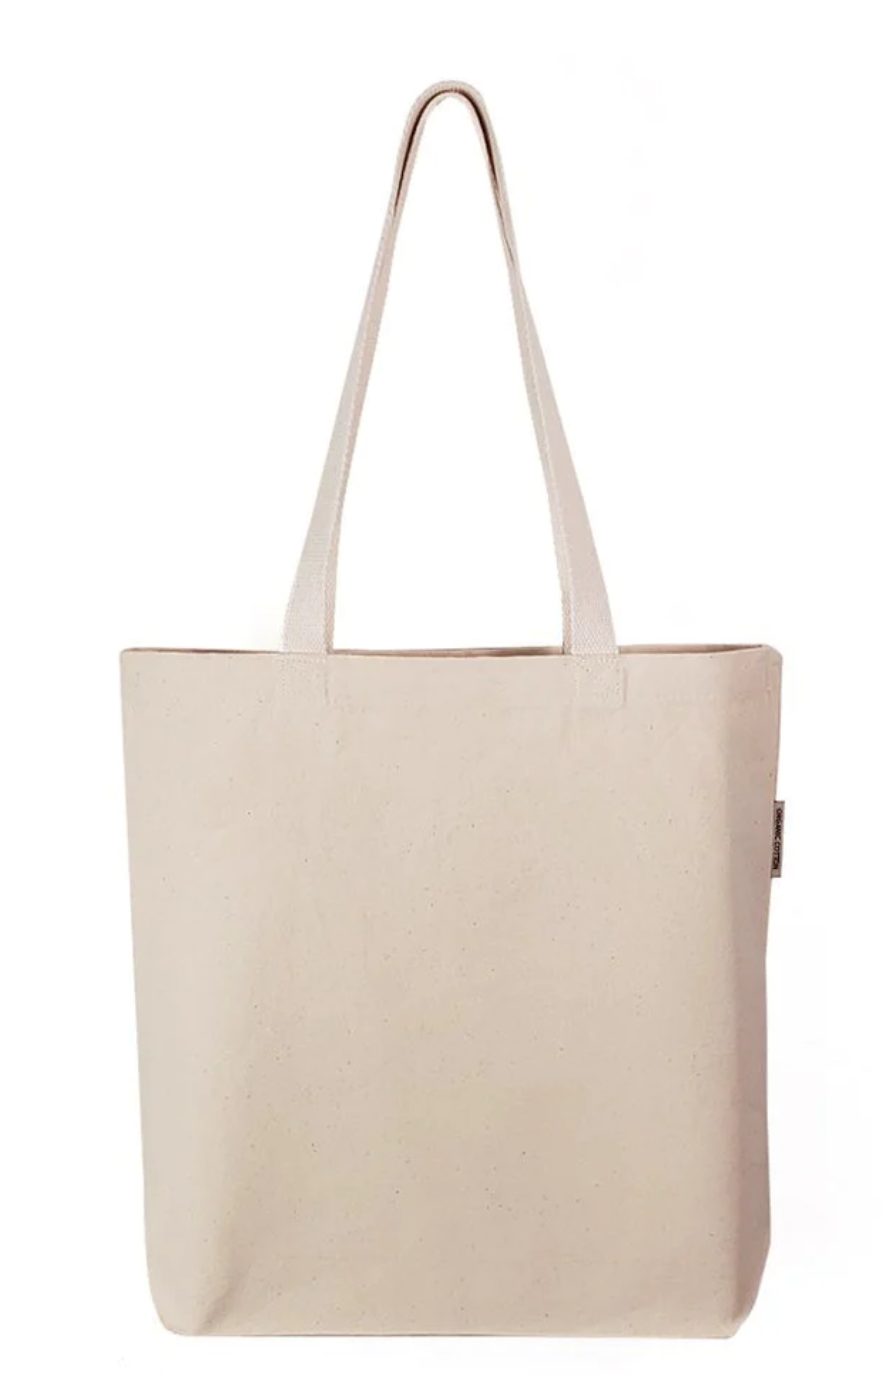 Durable 12 OZ Cotton Canvas Cosmetic Bag